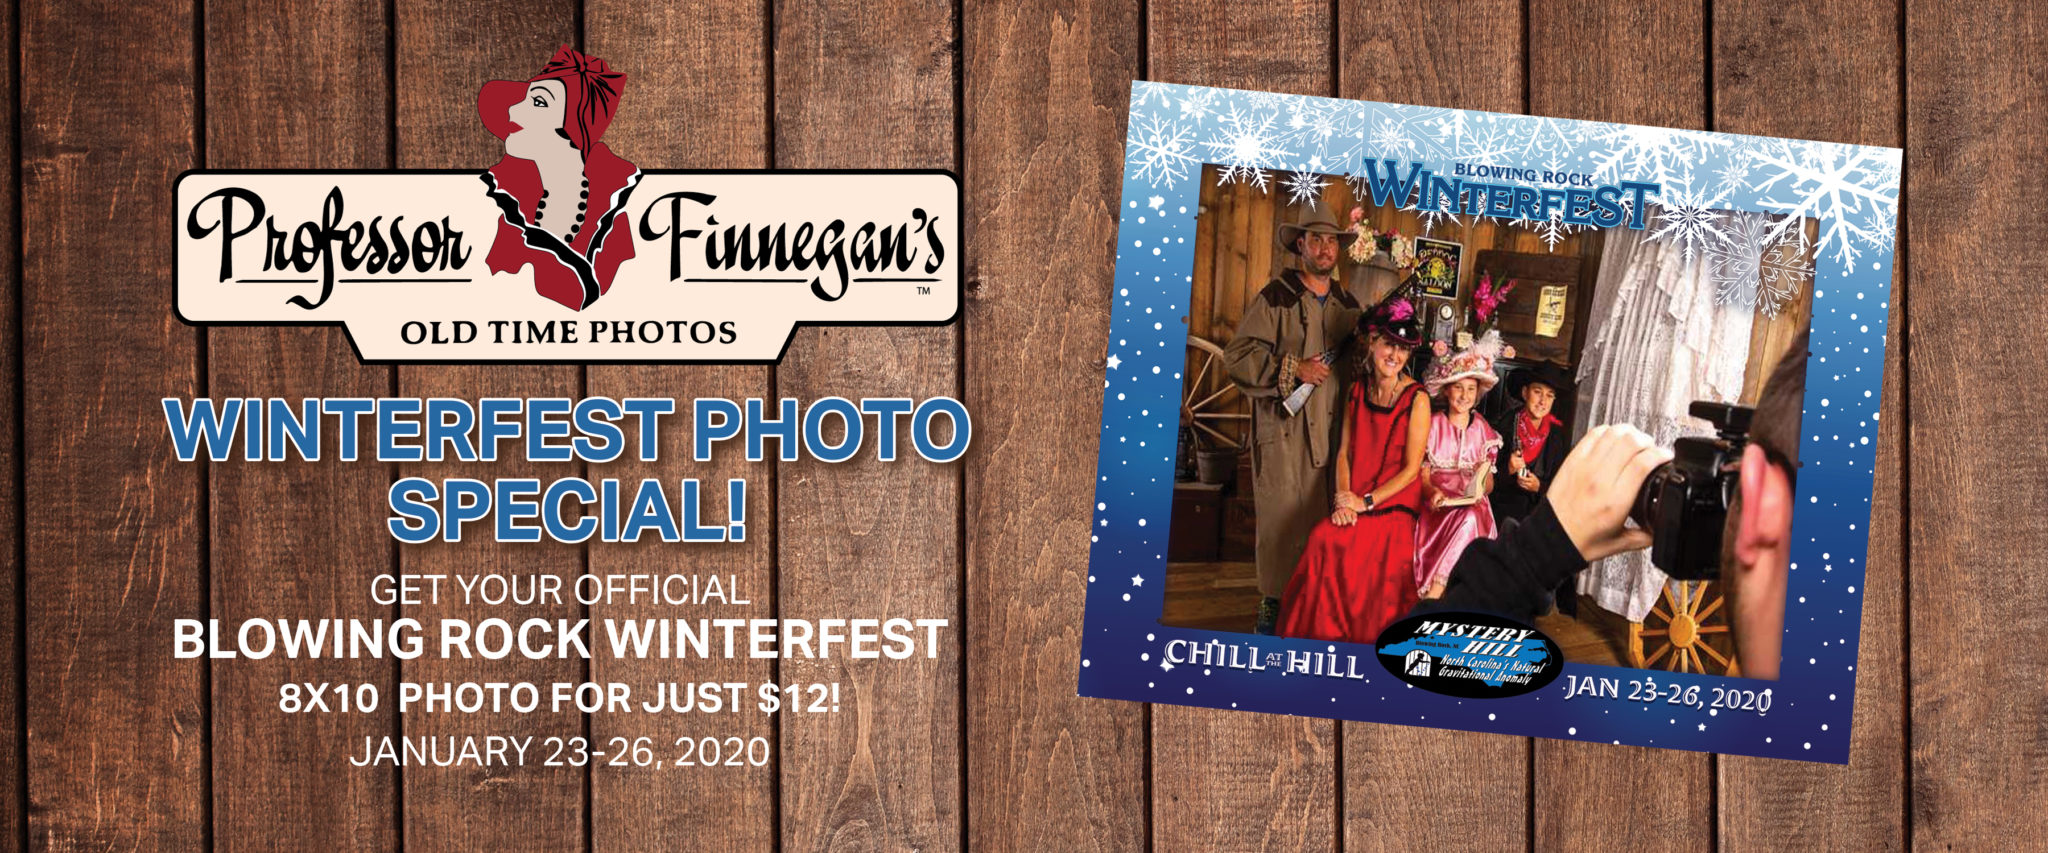 WinterFest Souvenir Photos at Professor Finnegan’s Old Time Photos